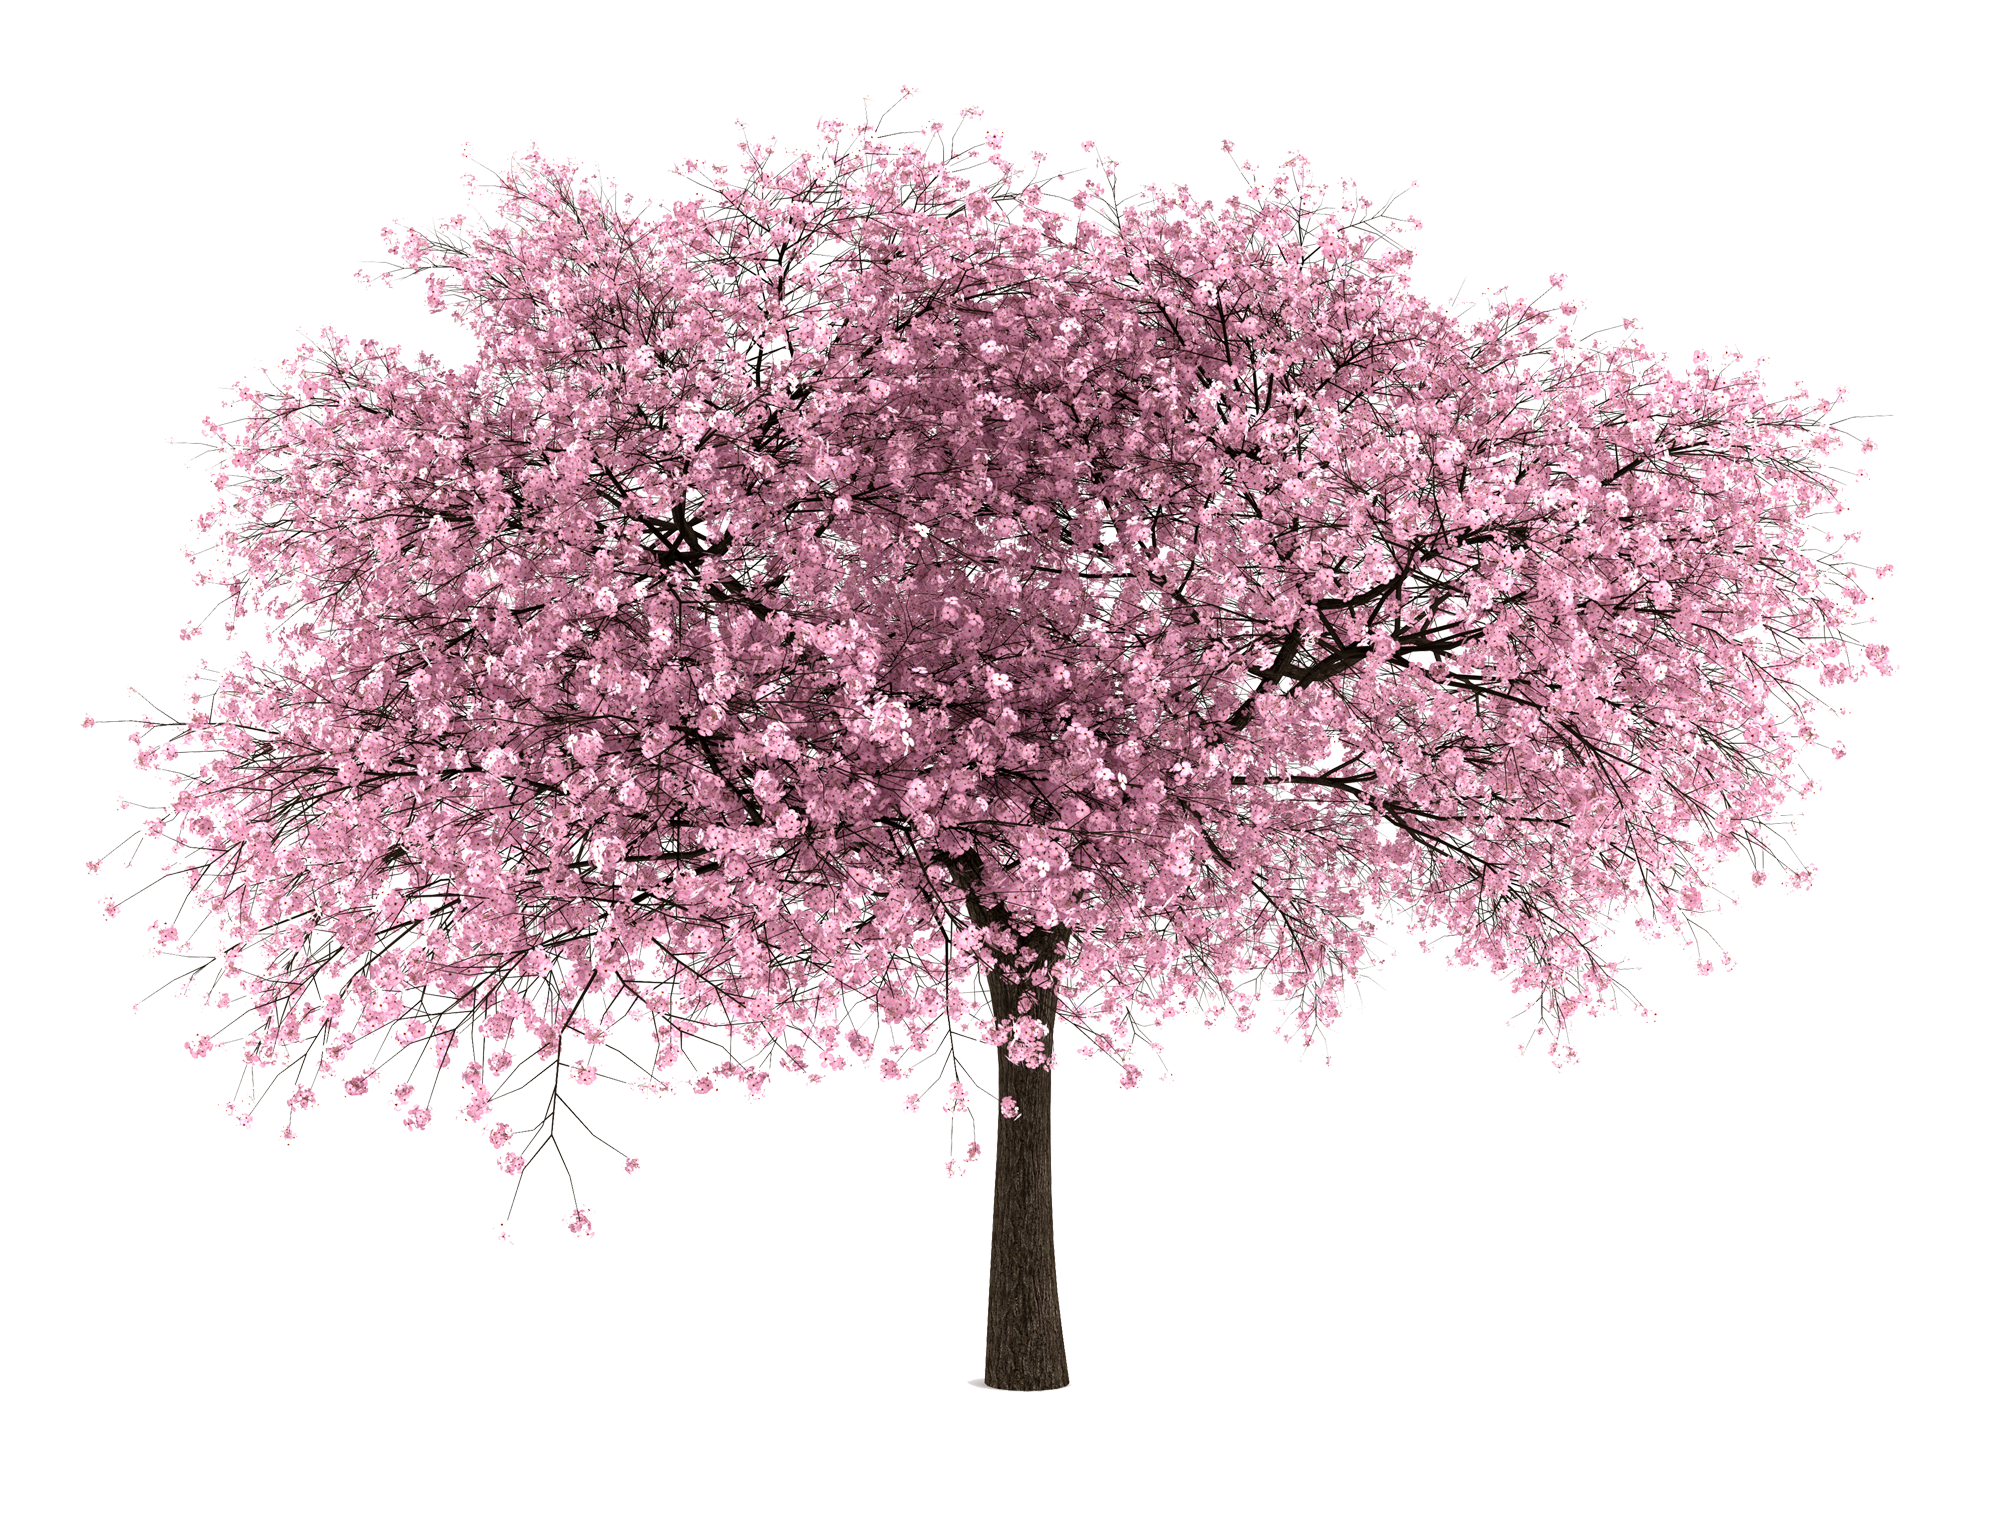 Cherry Blossom Tree Clipart